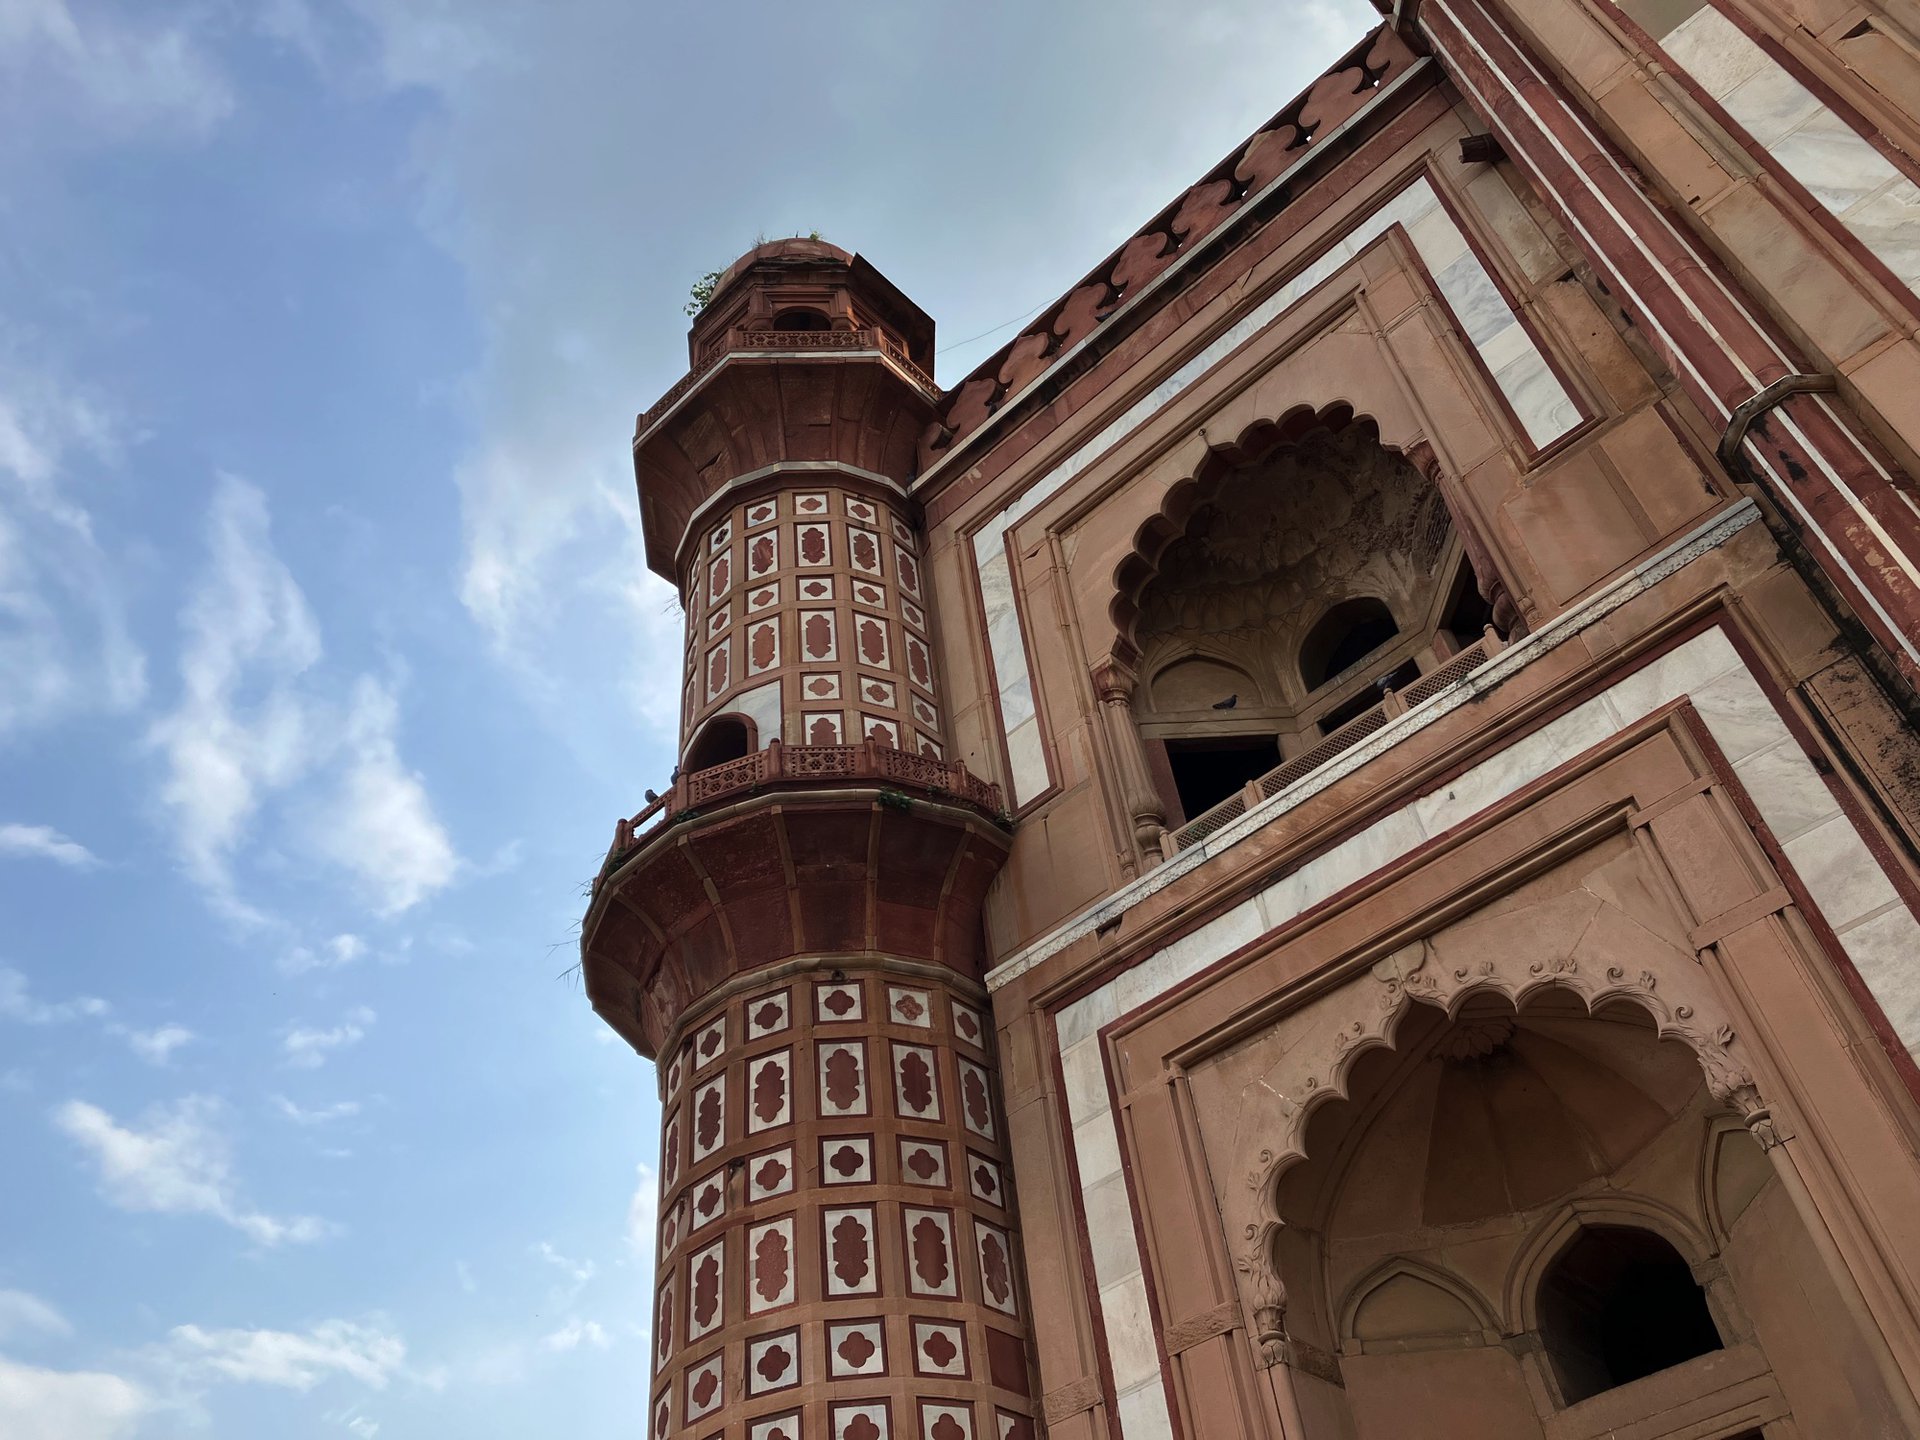 iPhone SE photo of a minaret